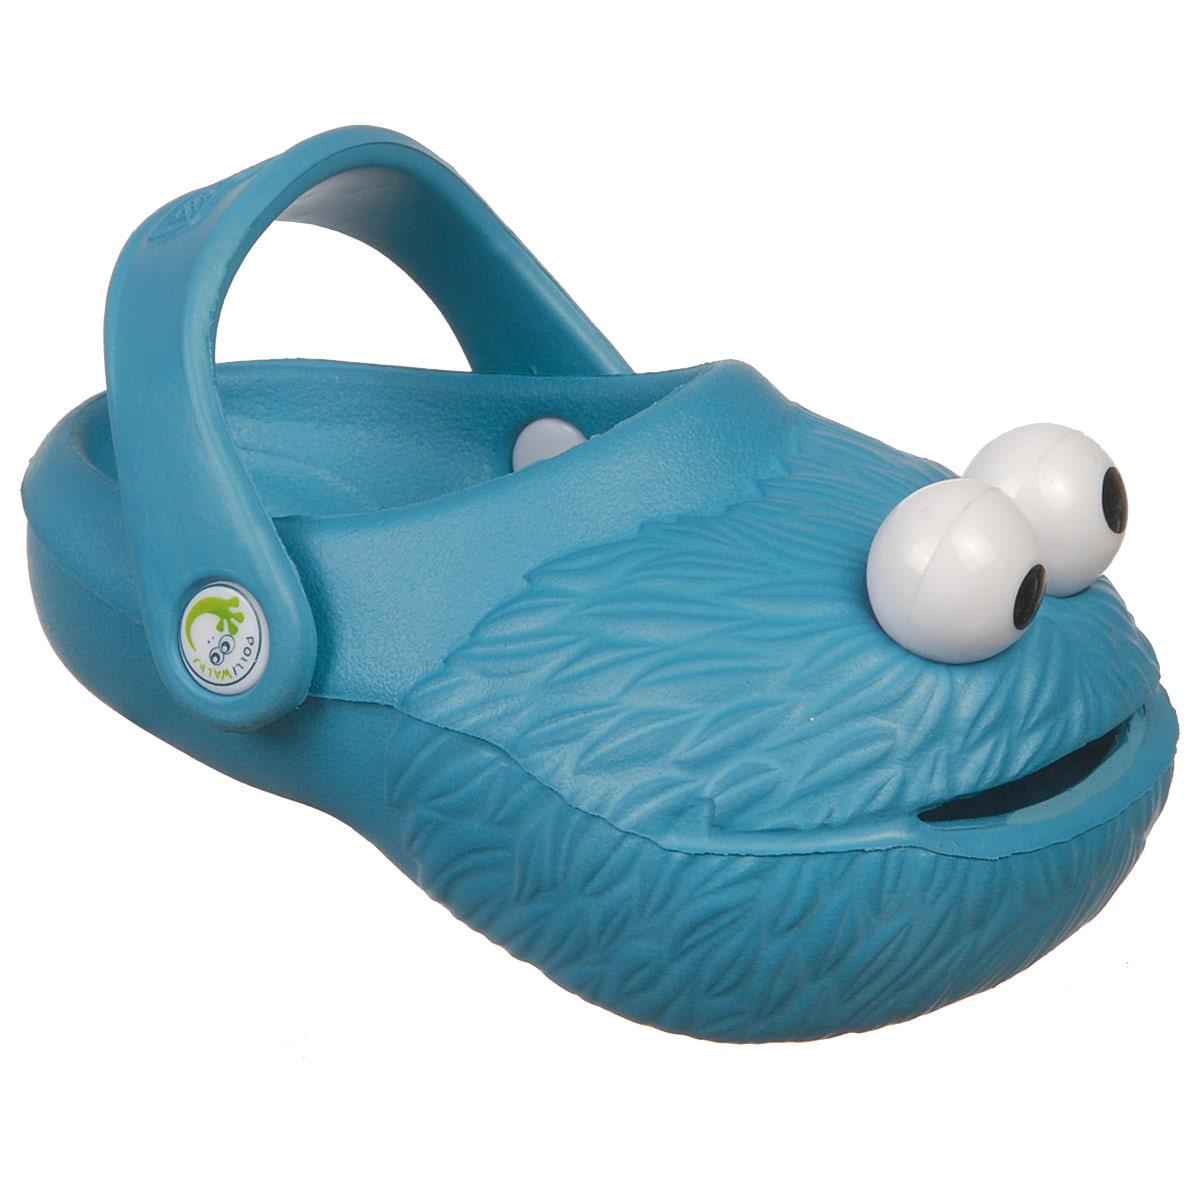 Polliwalks : Toddler shoes COOKIE MONSTER Blue # 6